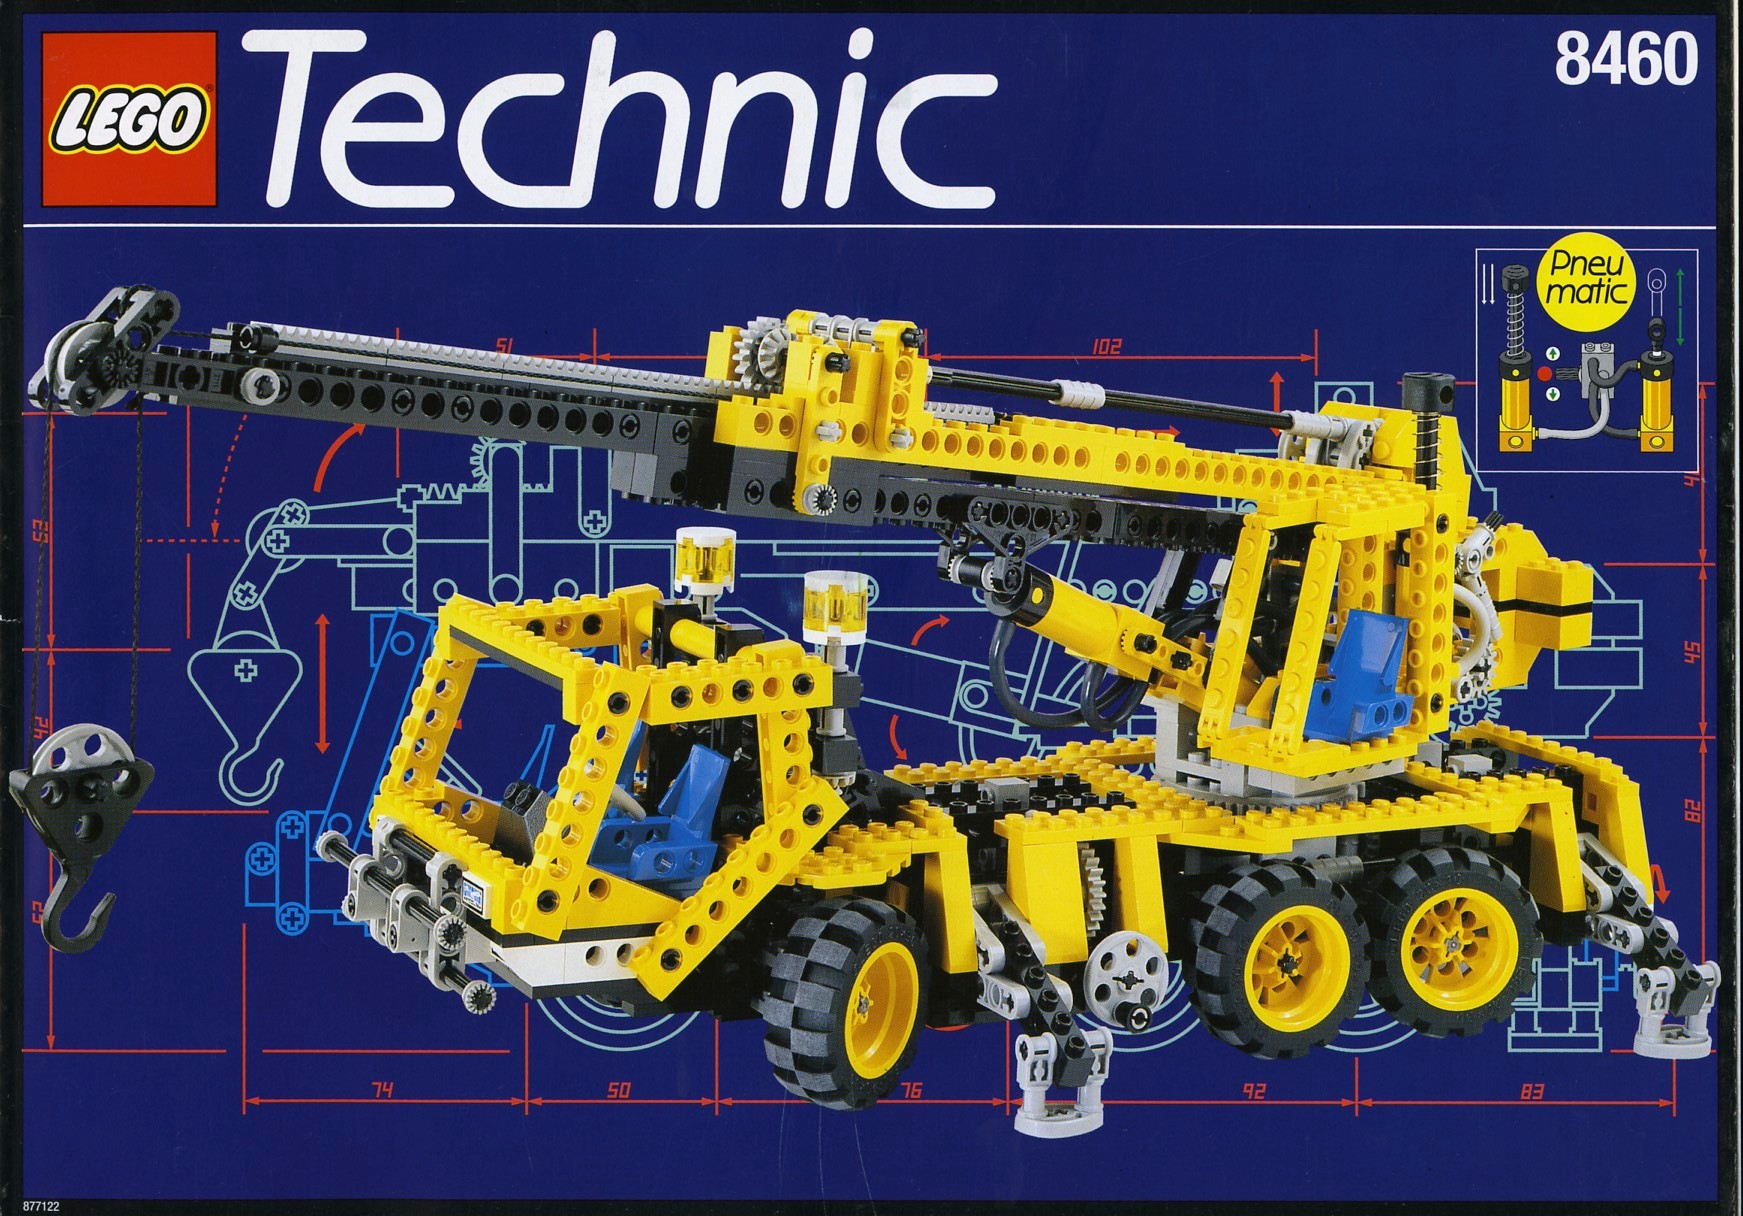 Technic | 1995 | Brickset: LEGO set 